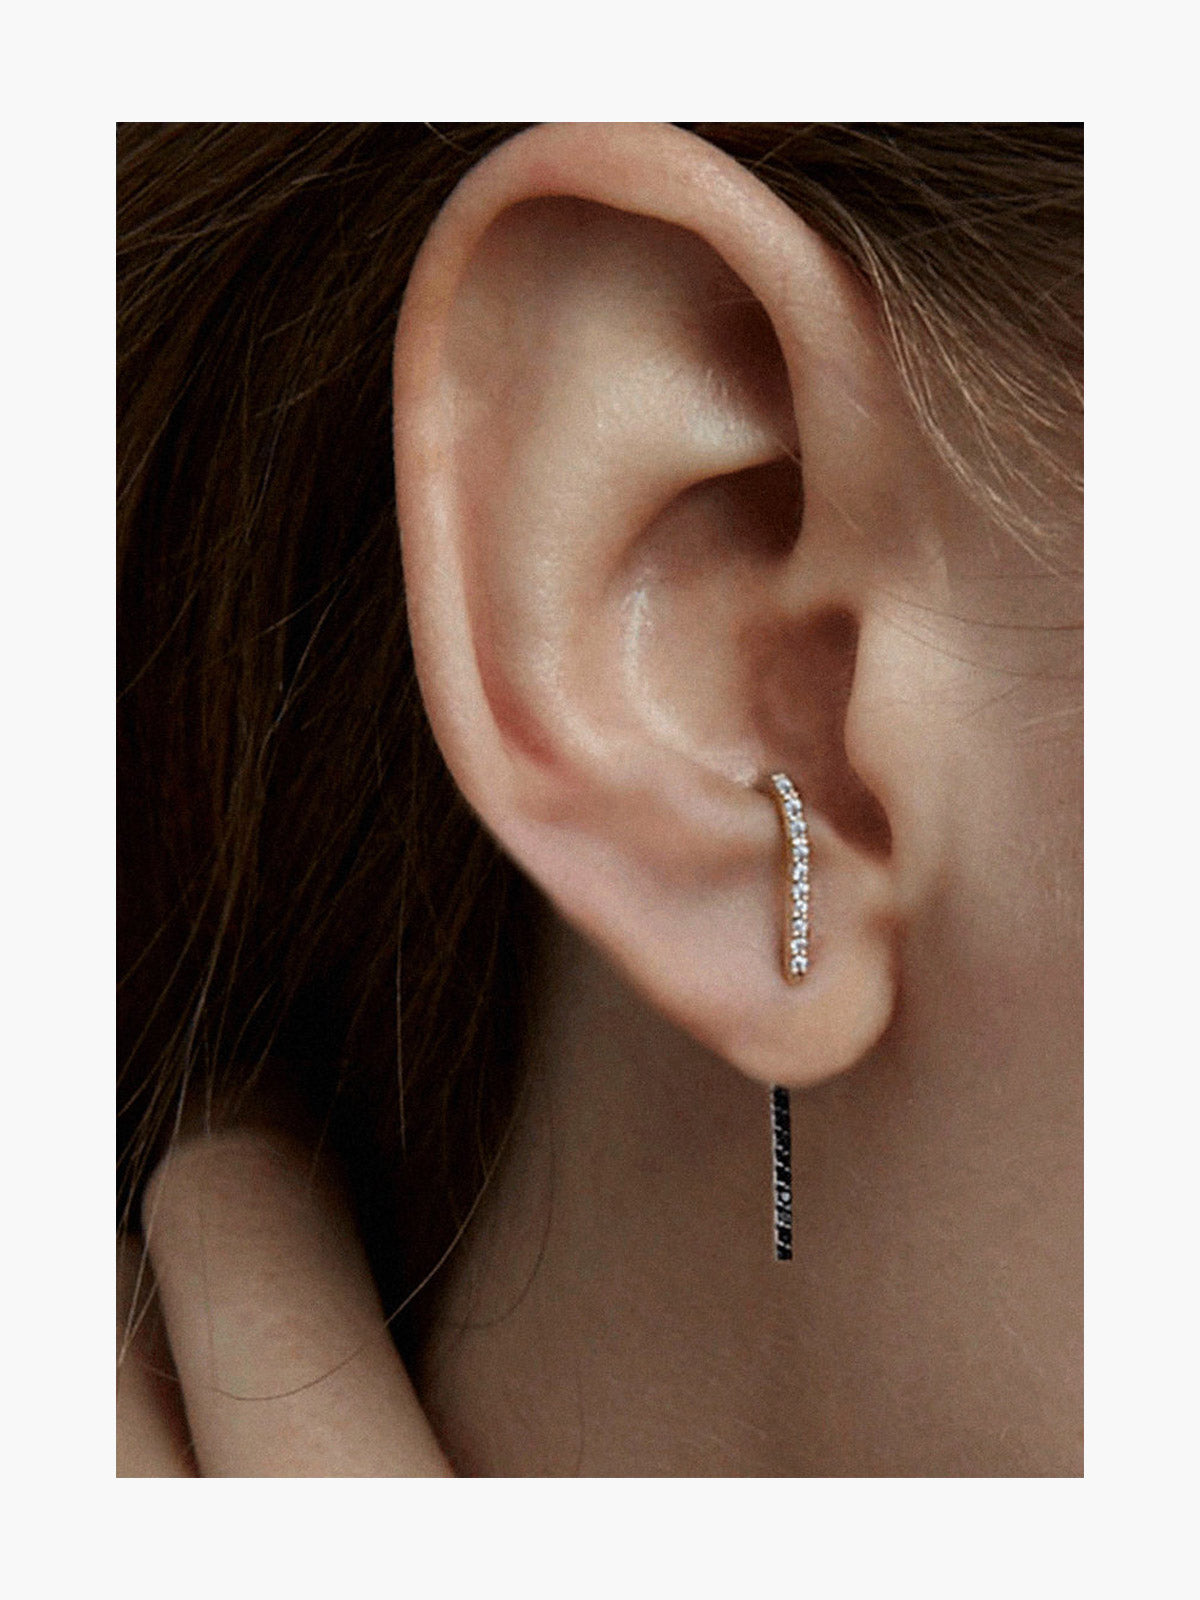 B&W Petite Ear Pin - Fashionkind